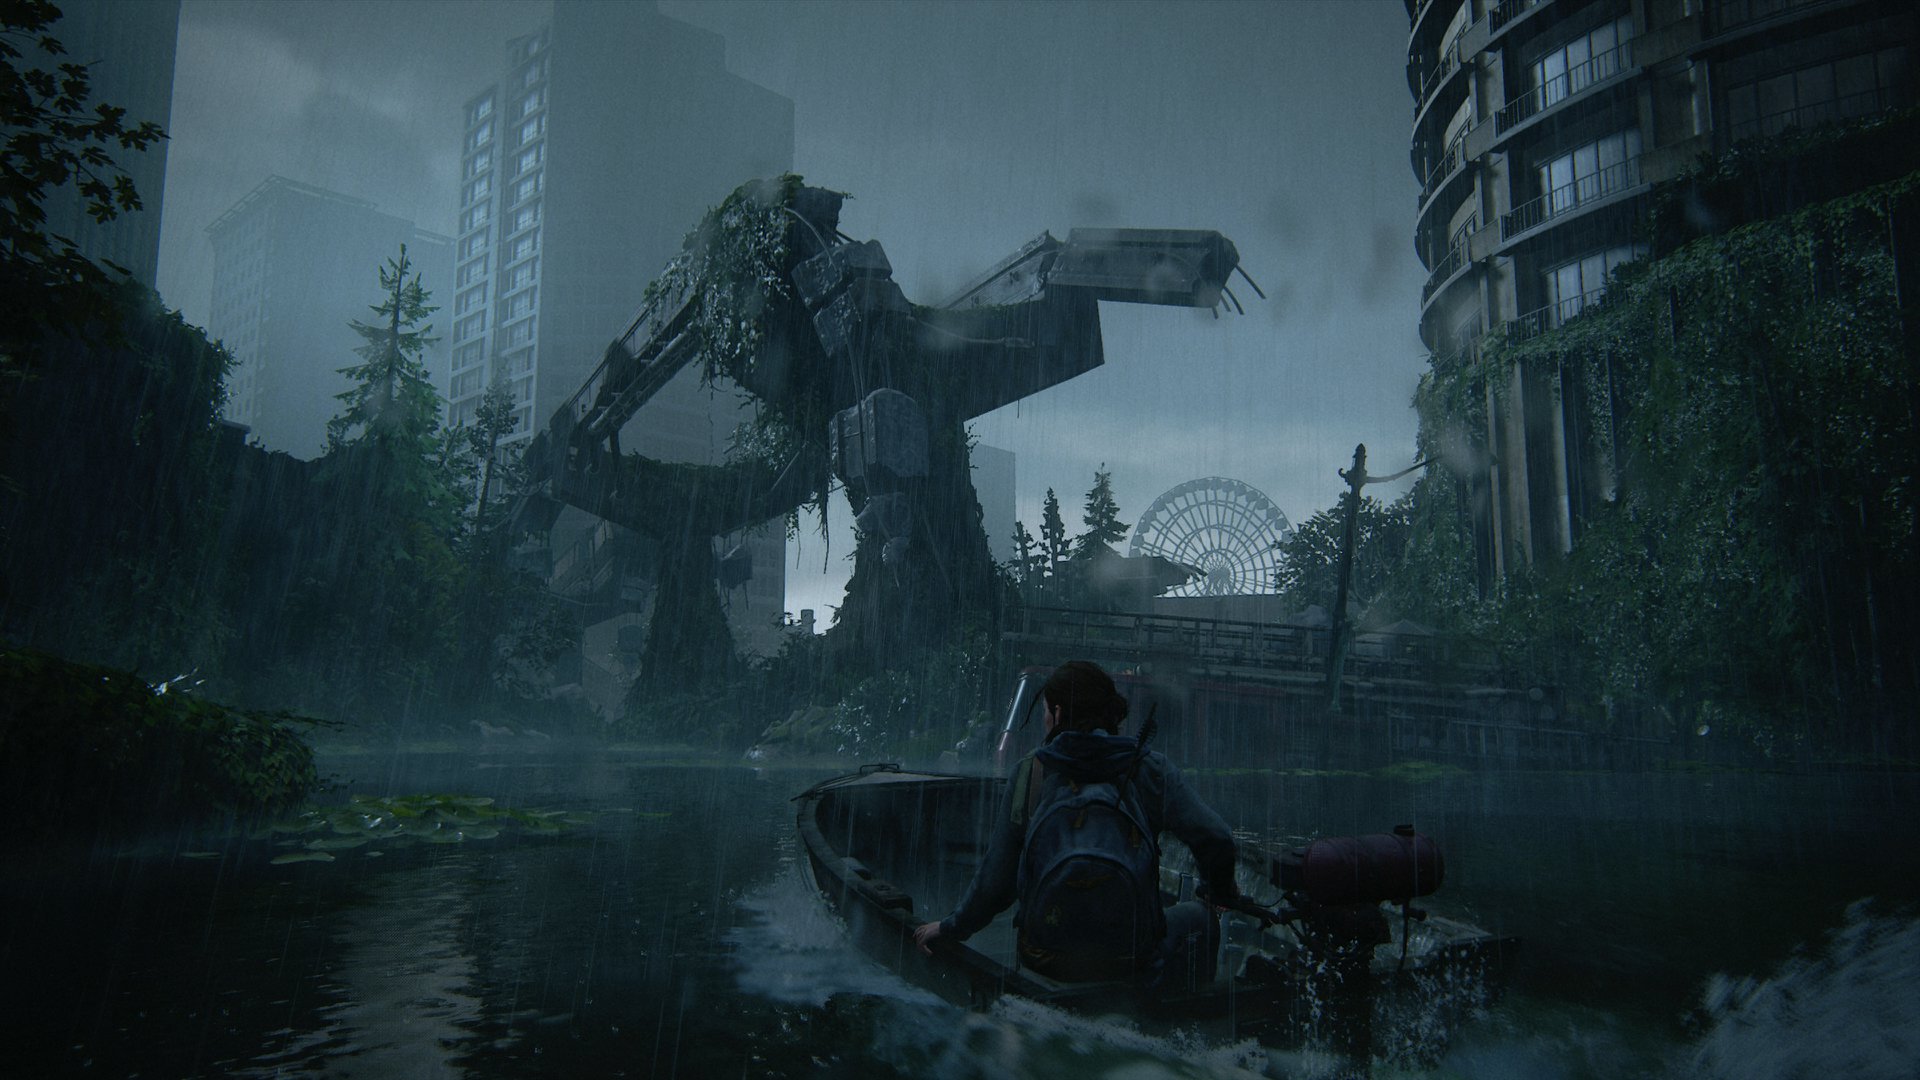 The Last of Us Remastered Ultra HD Desktop Background Wallpaper